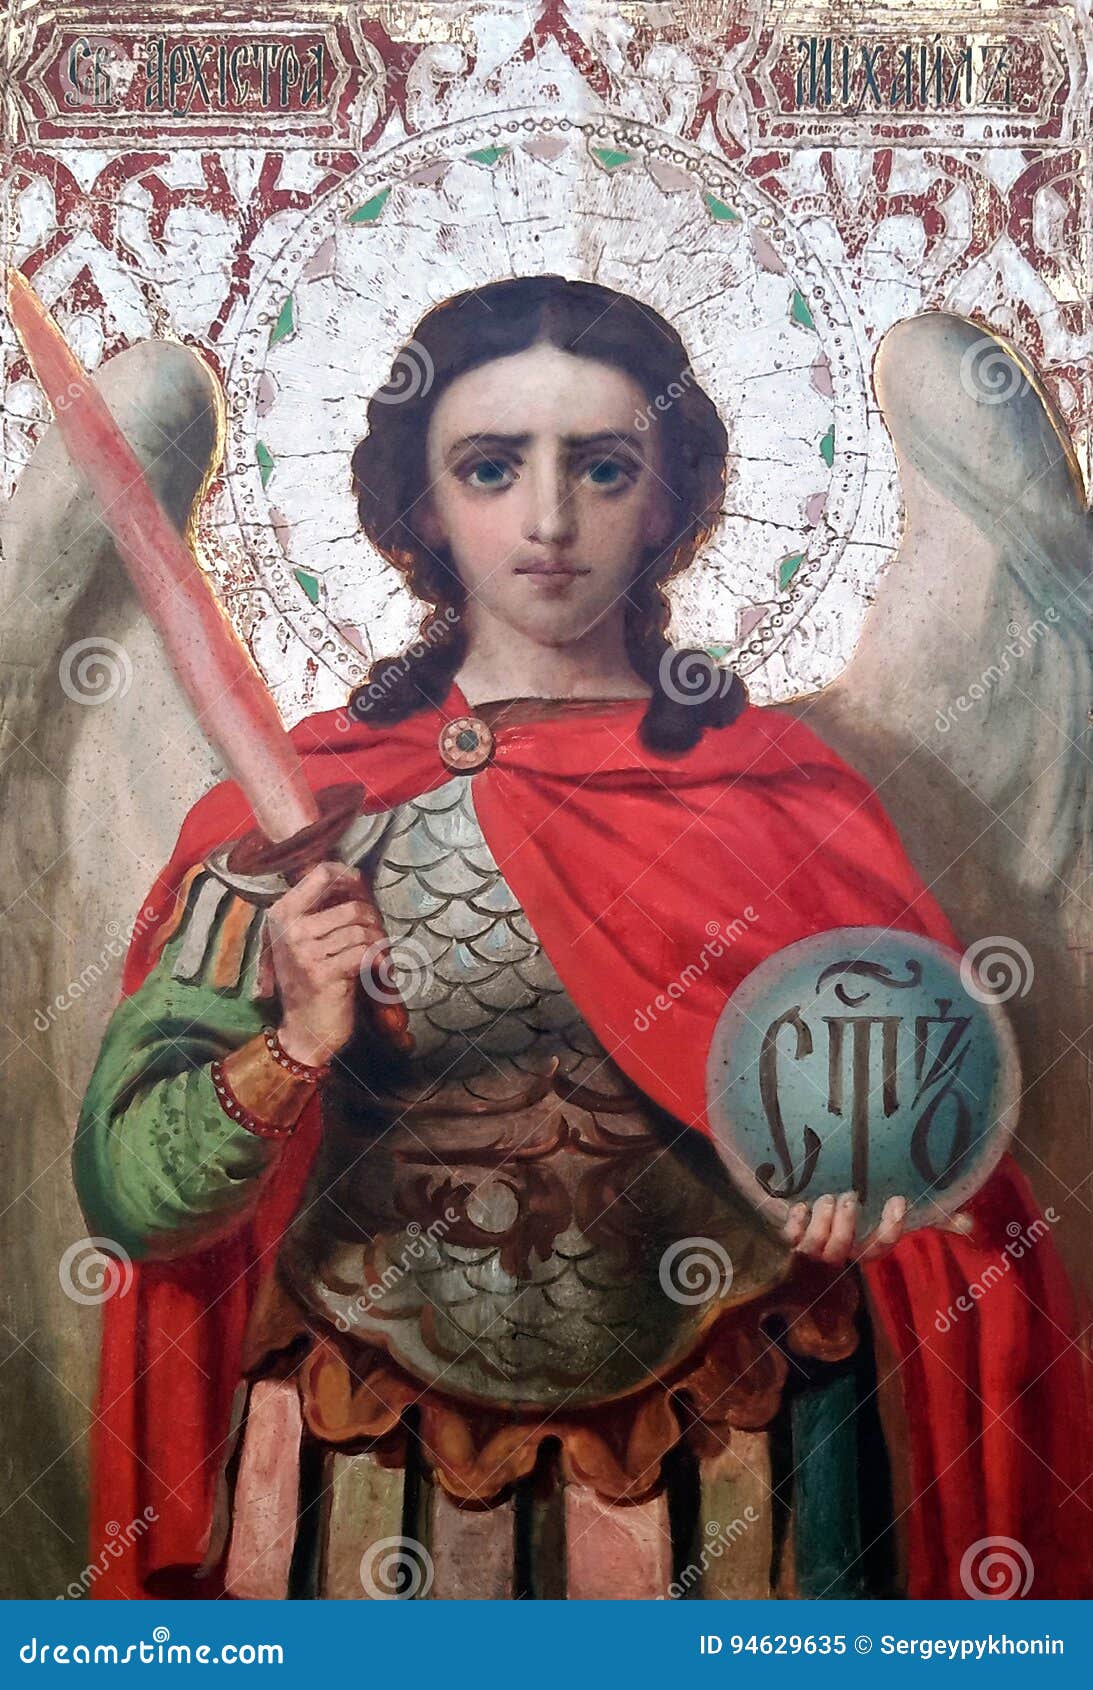 archangel saint michael. guardian of paradise. church iconography